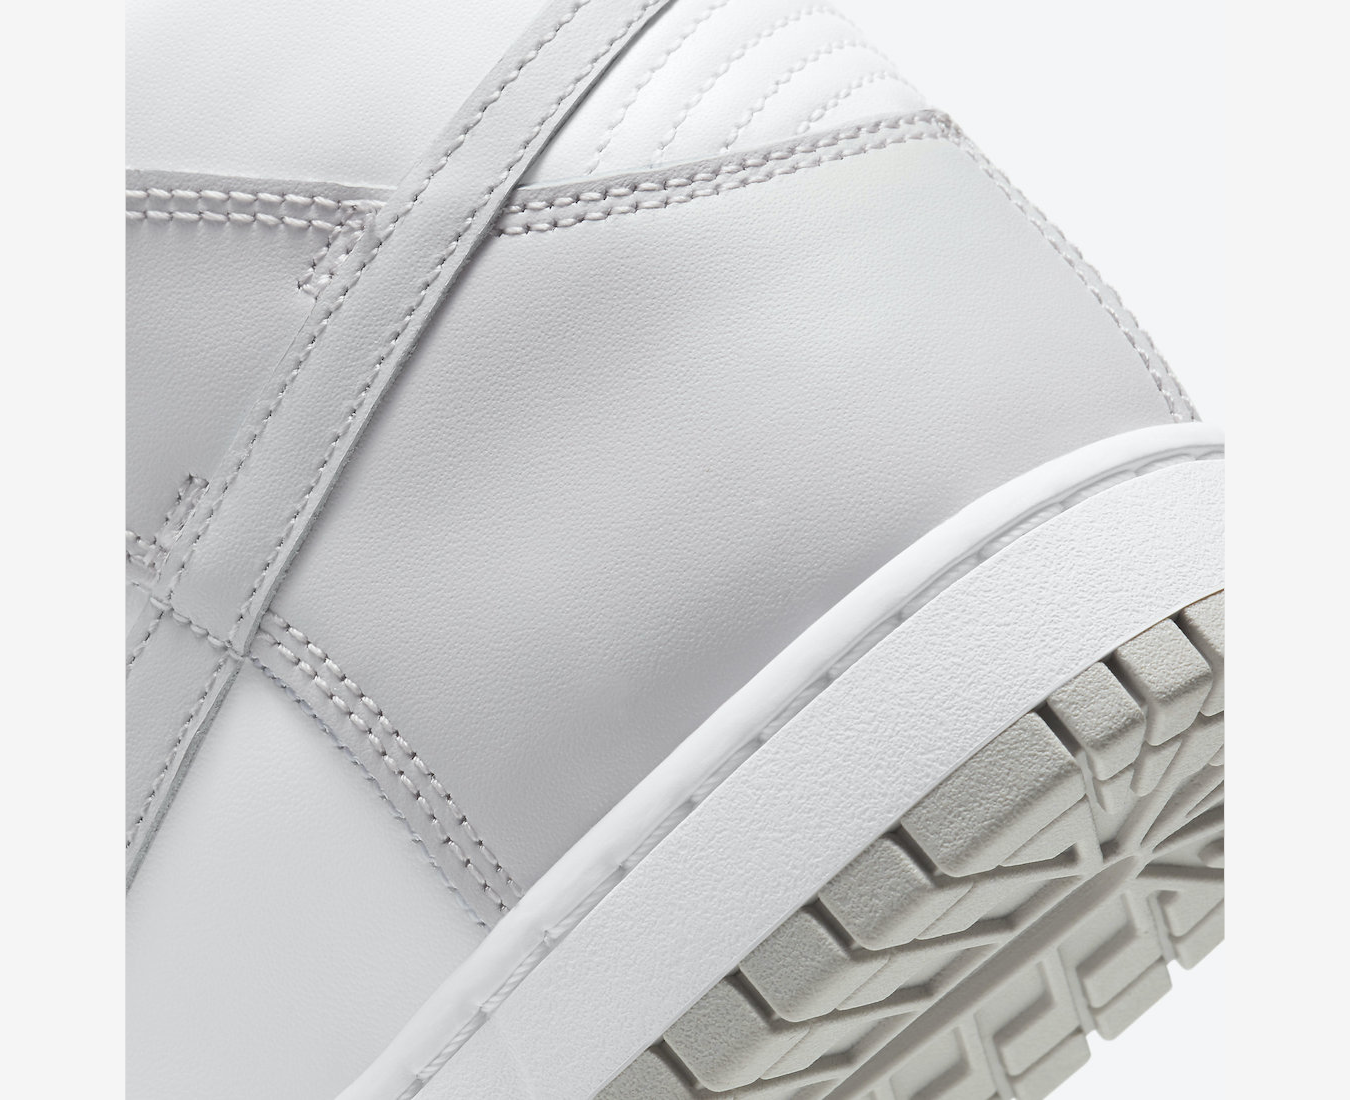 Nike Dunk High 'White Vast Grey'